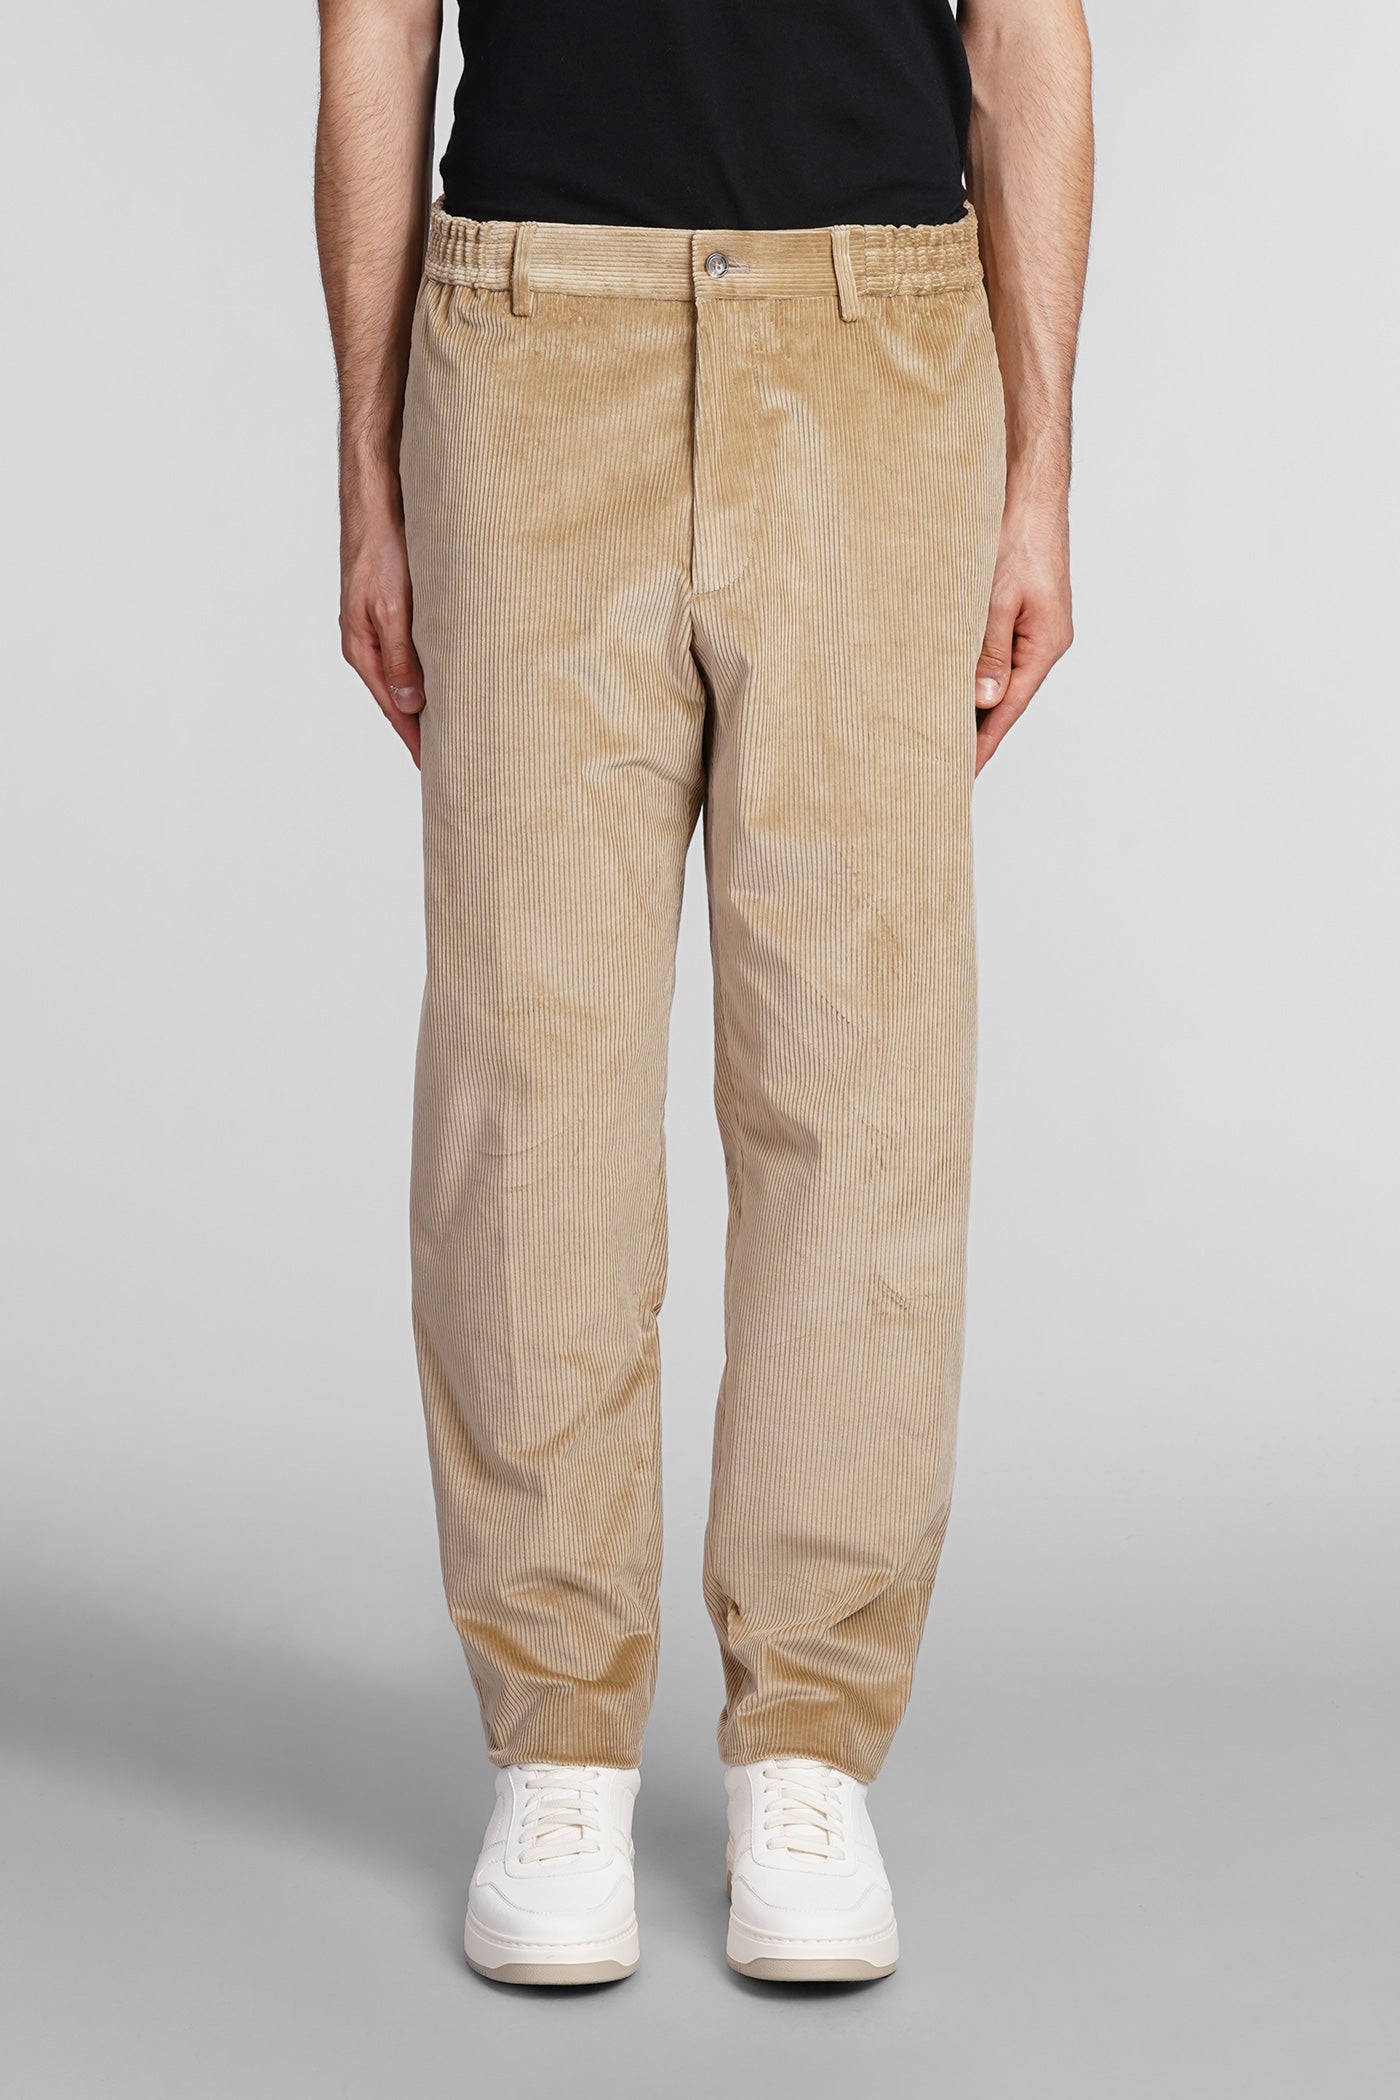 Tagliatore 0205 - Pants in Camel cotton